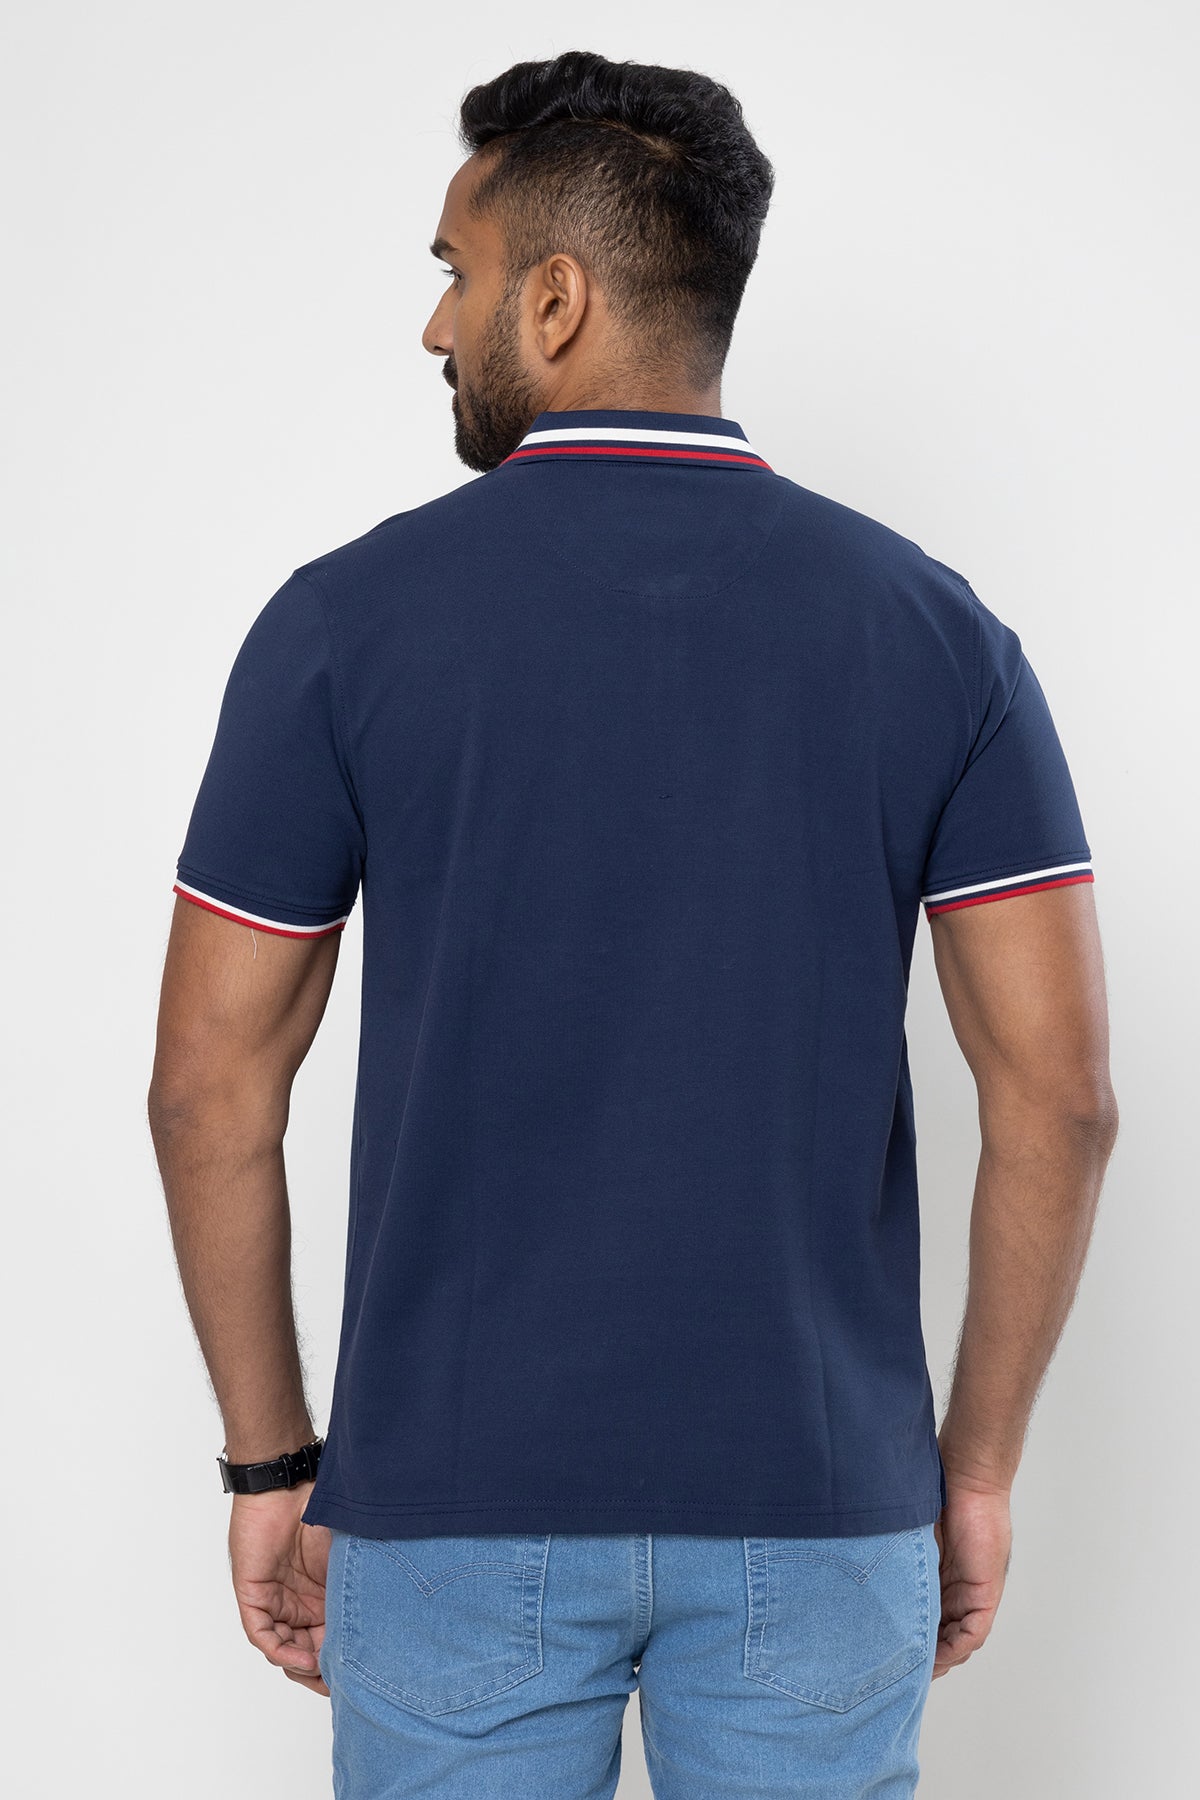 King Street Men's Short Sleeve Casual Polo T-Shirt